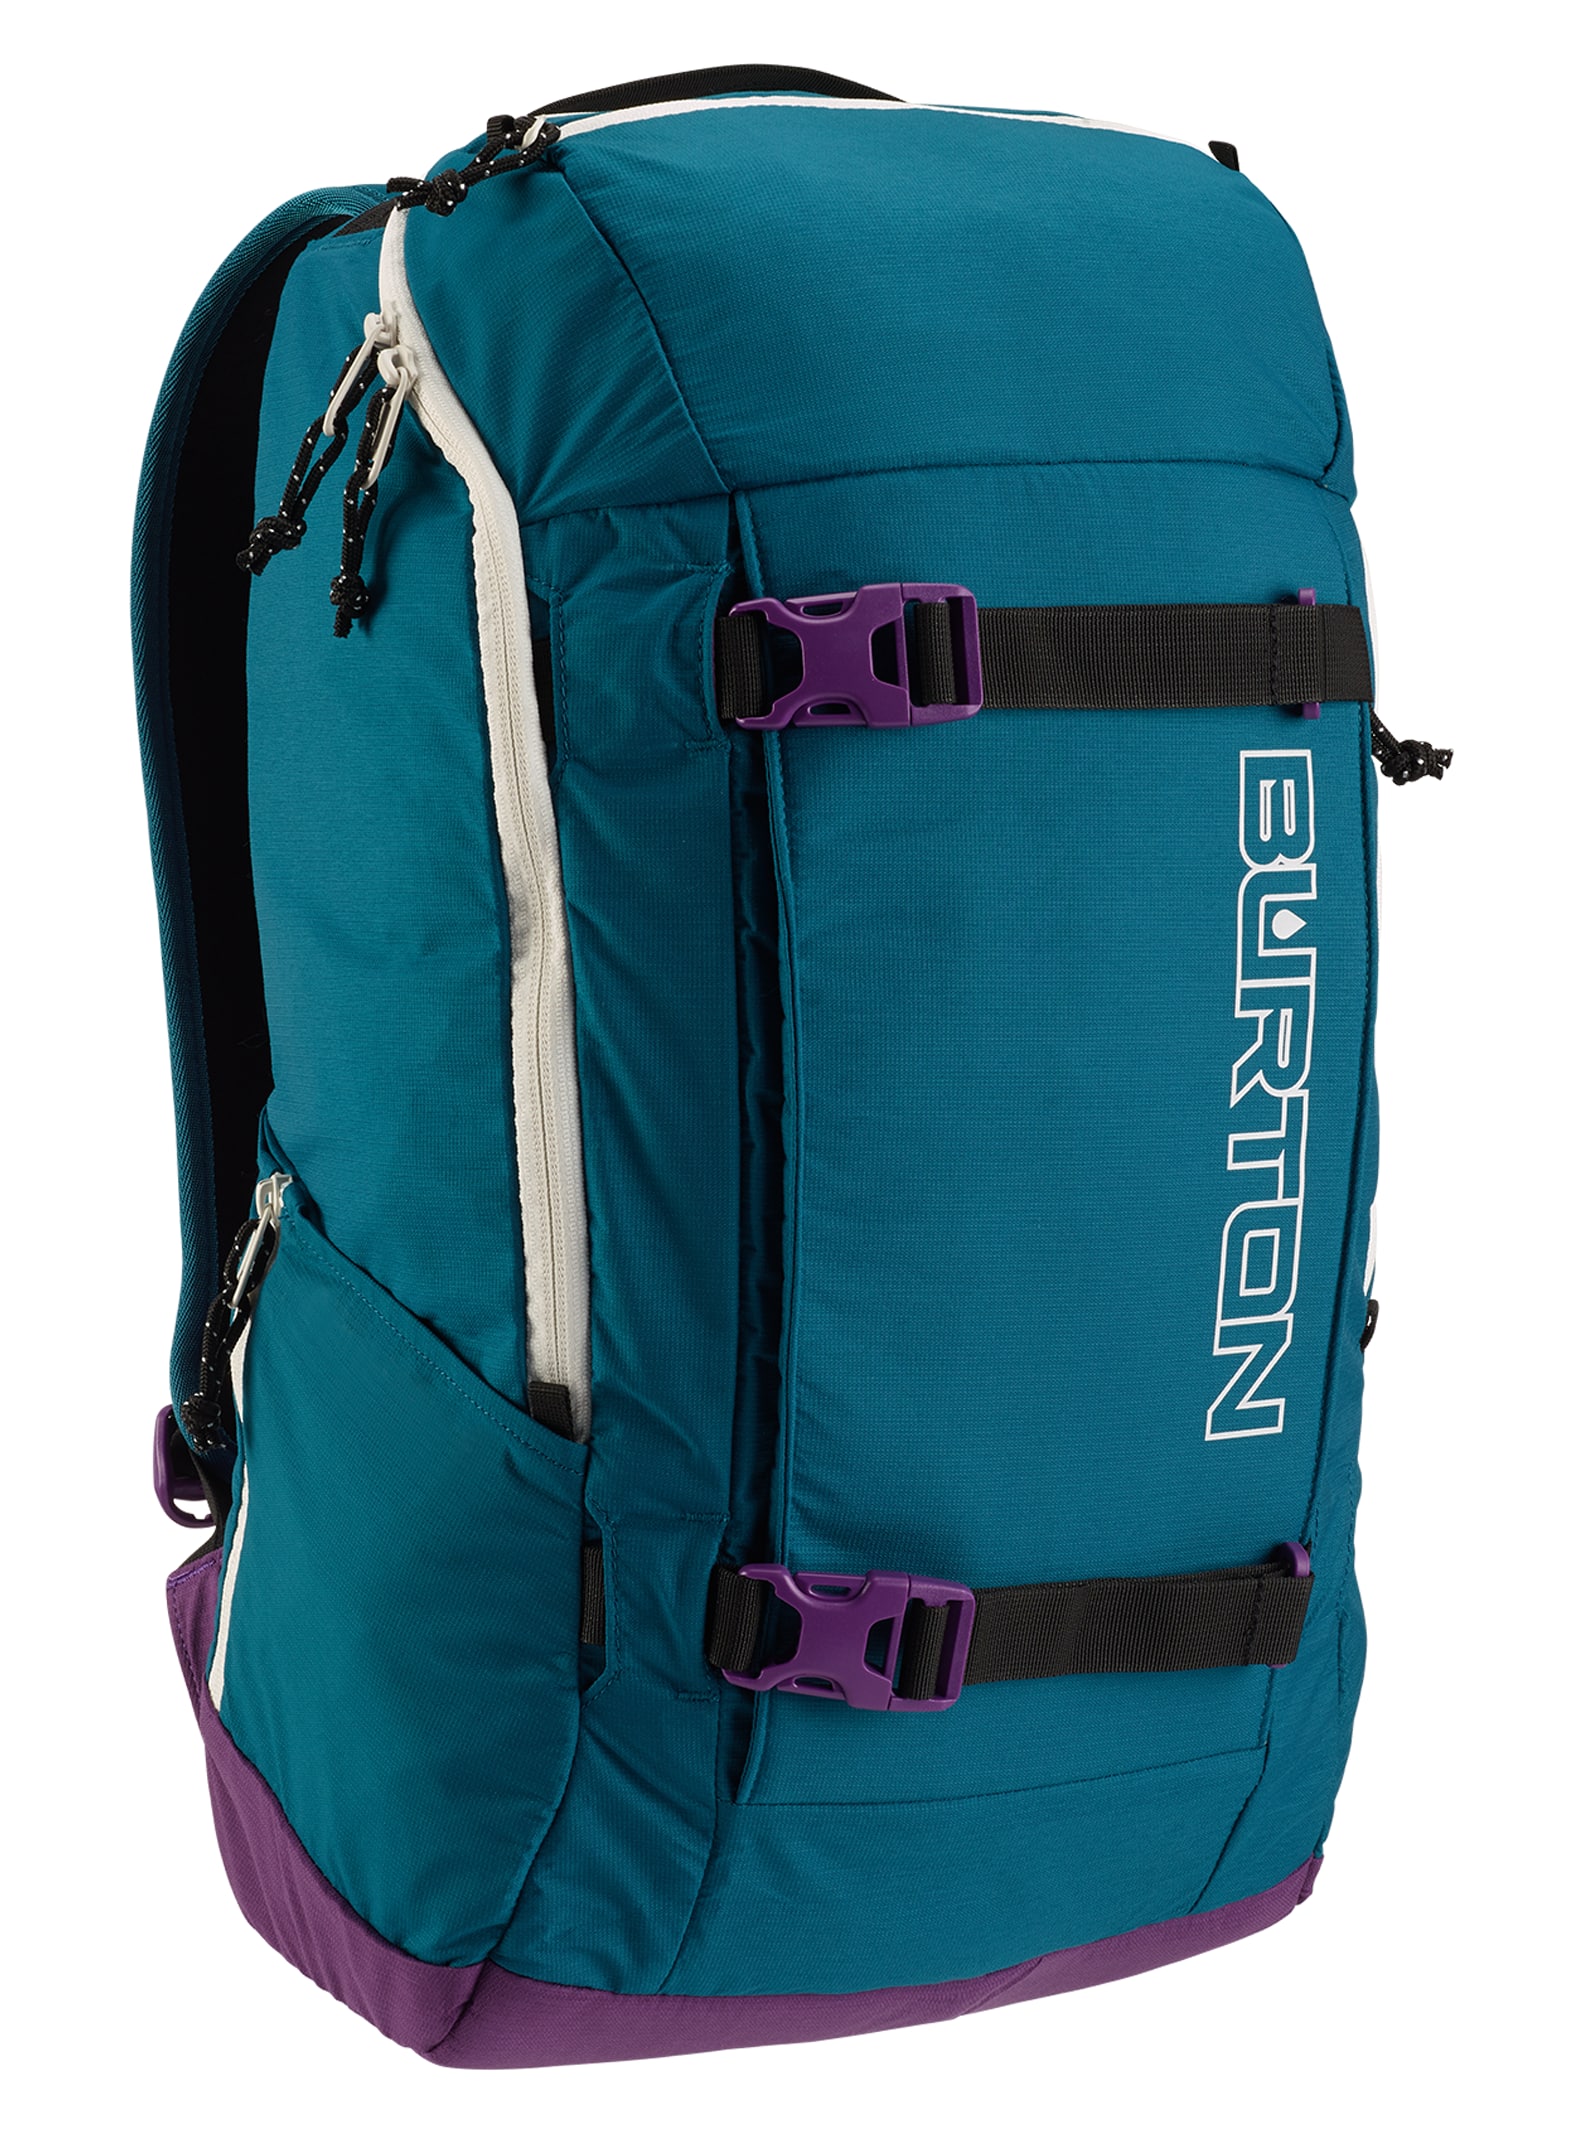 Burton Kilo 2.0 27L Solution-Dyed Backpack | Burton.com Spring 2020 US